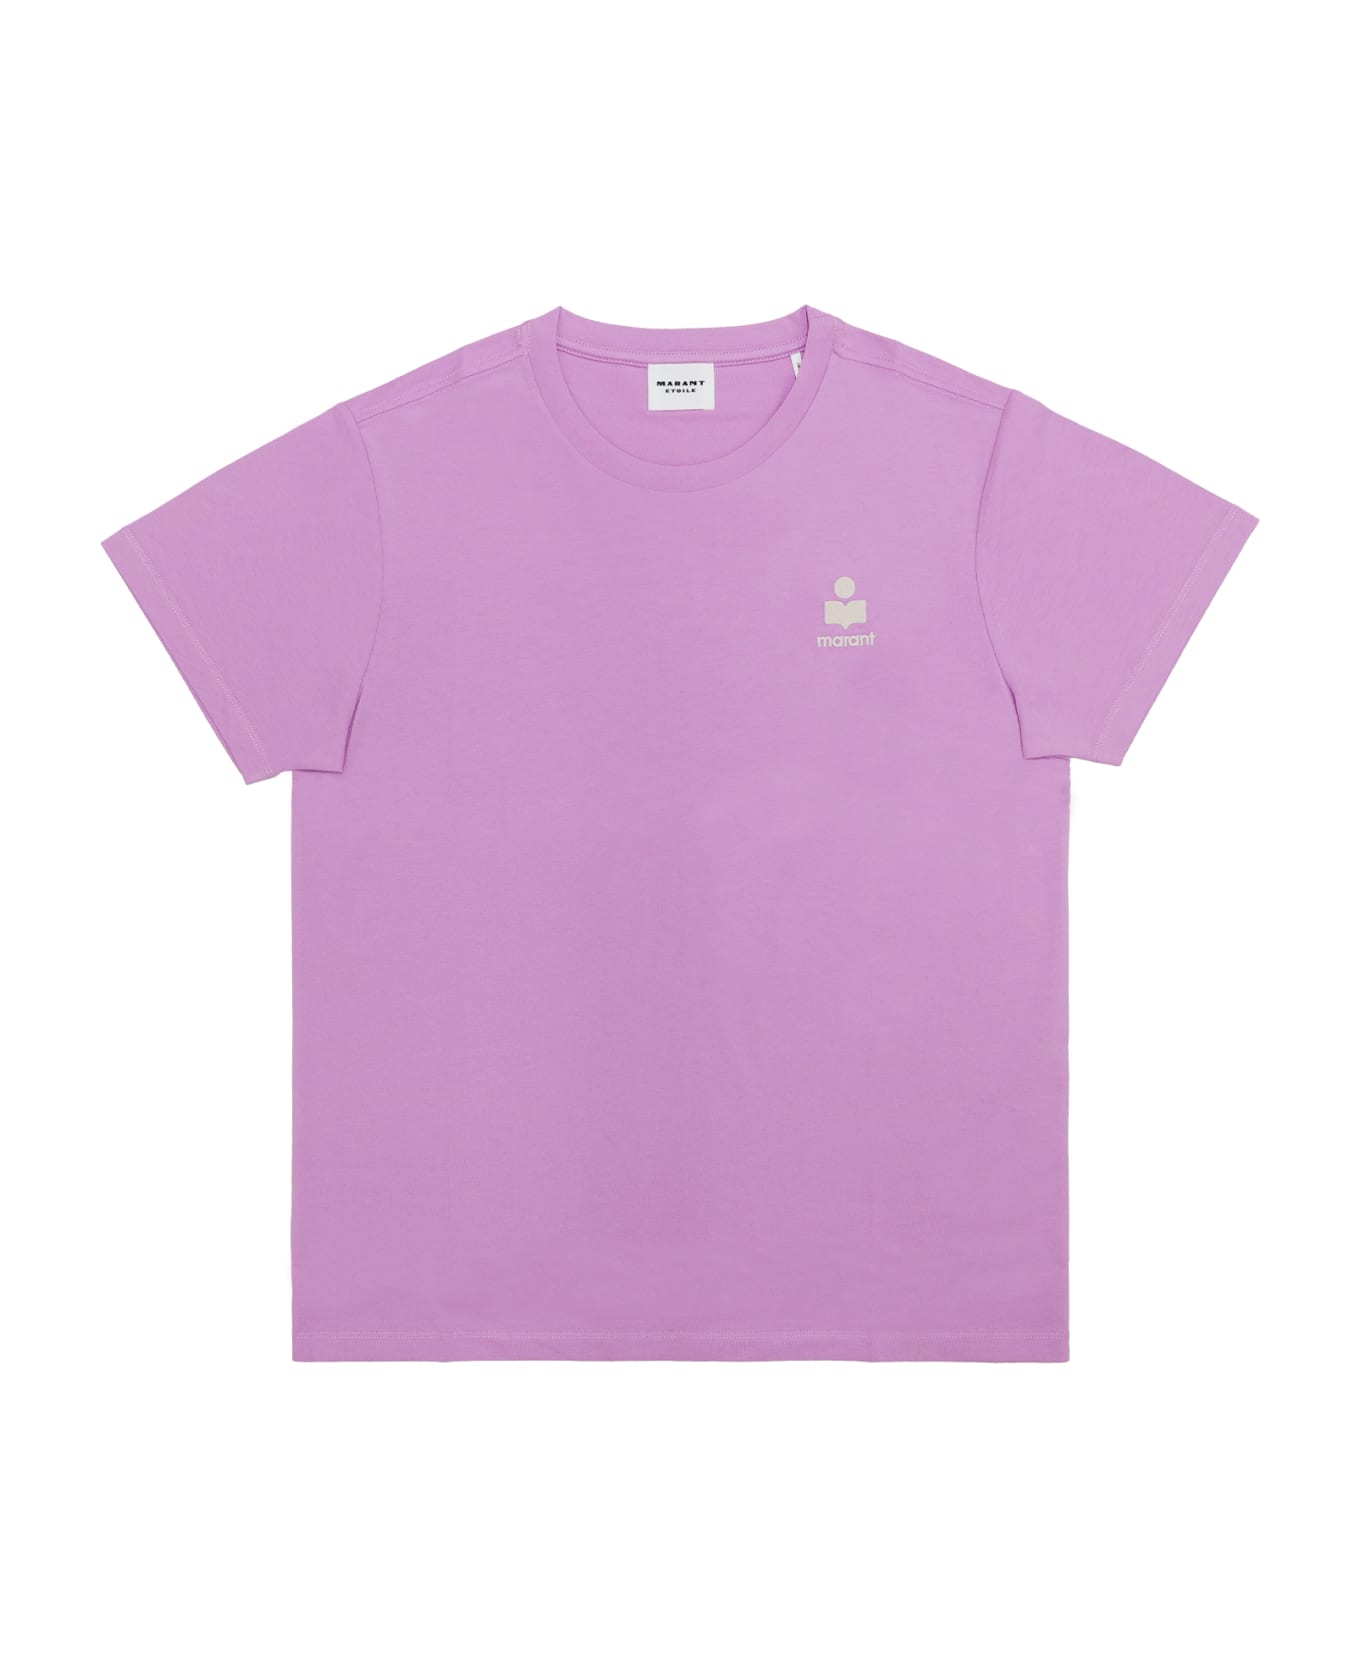 Marant Étoile T-shirt - Pink